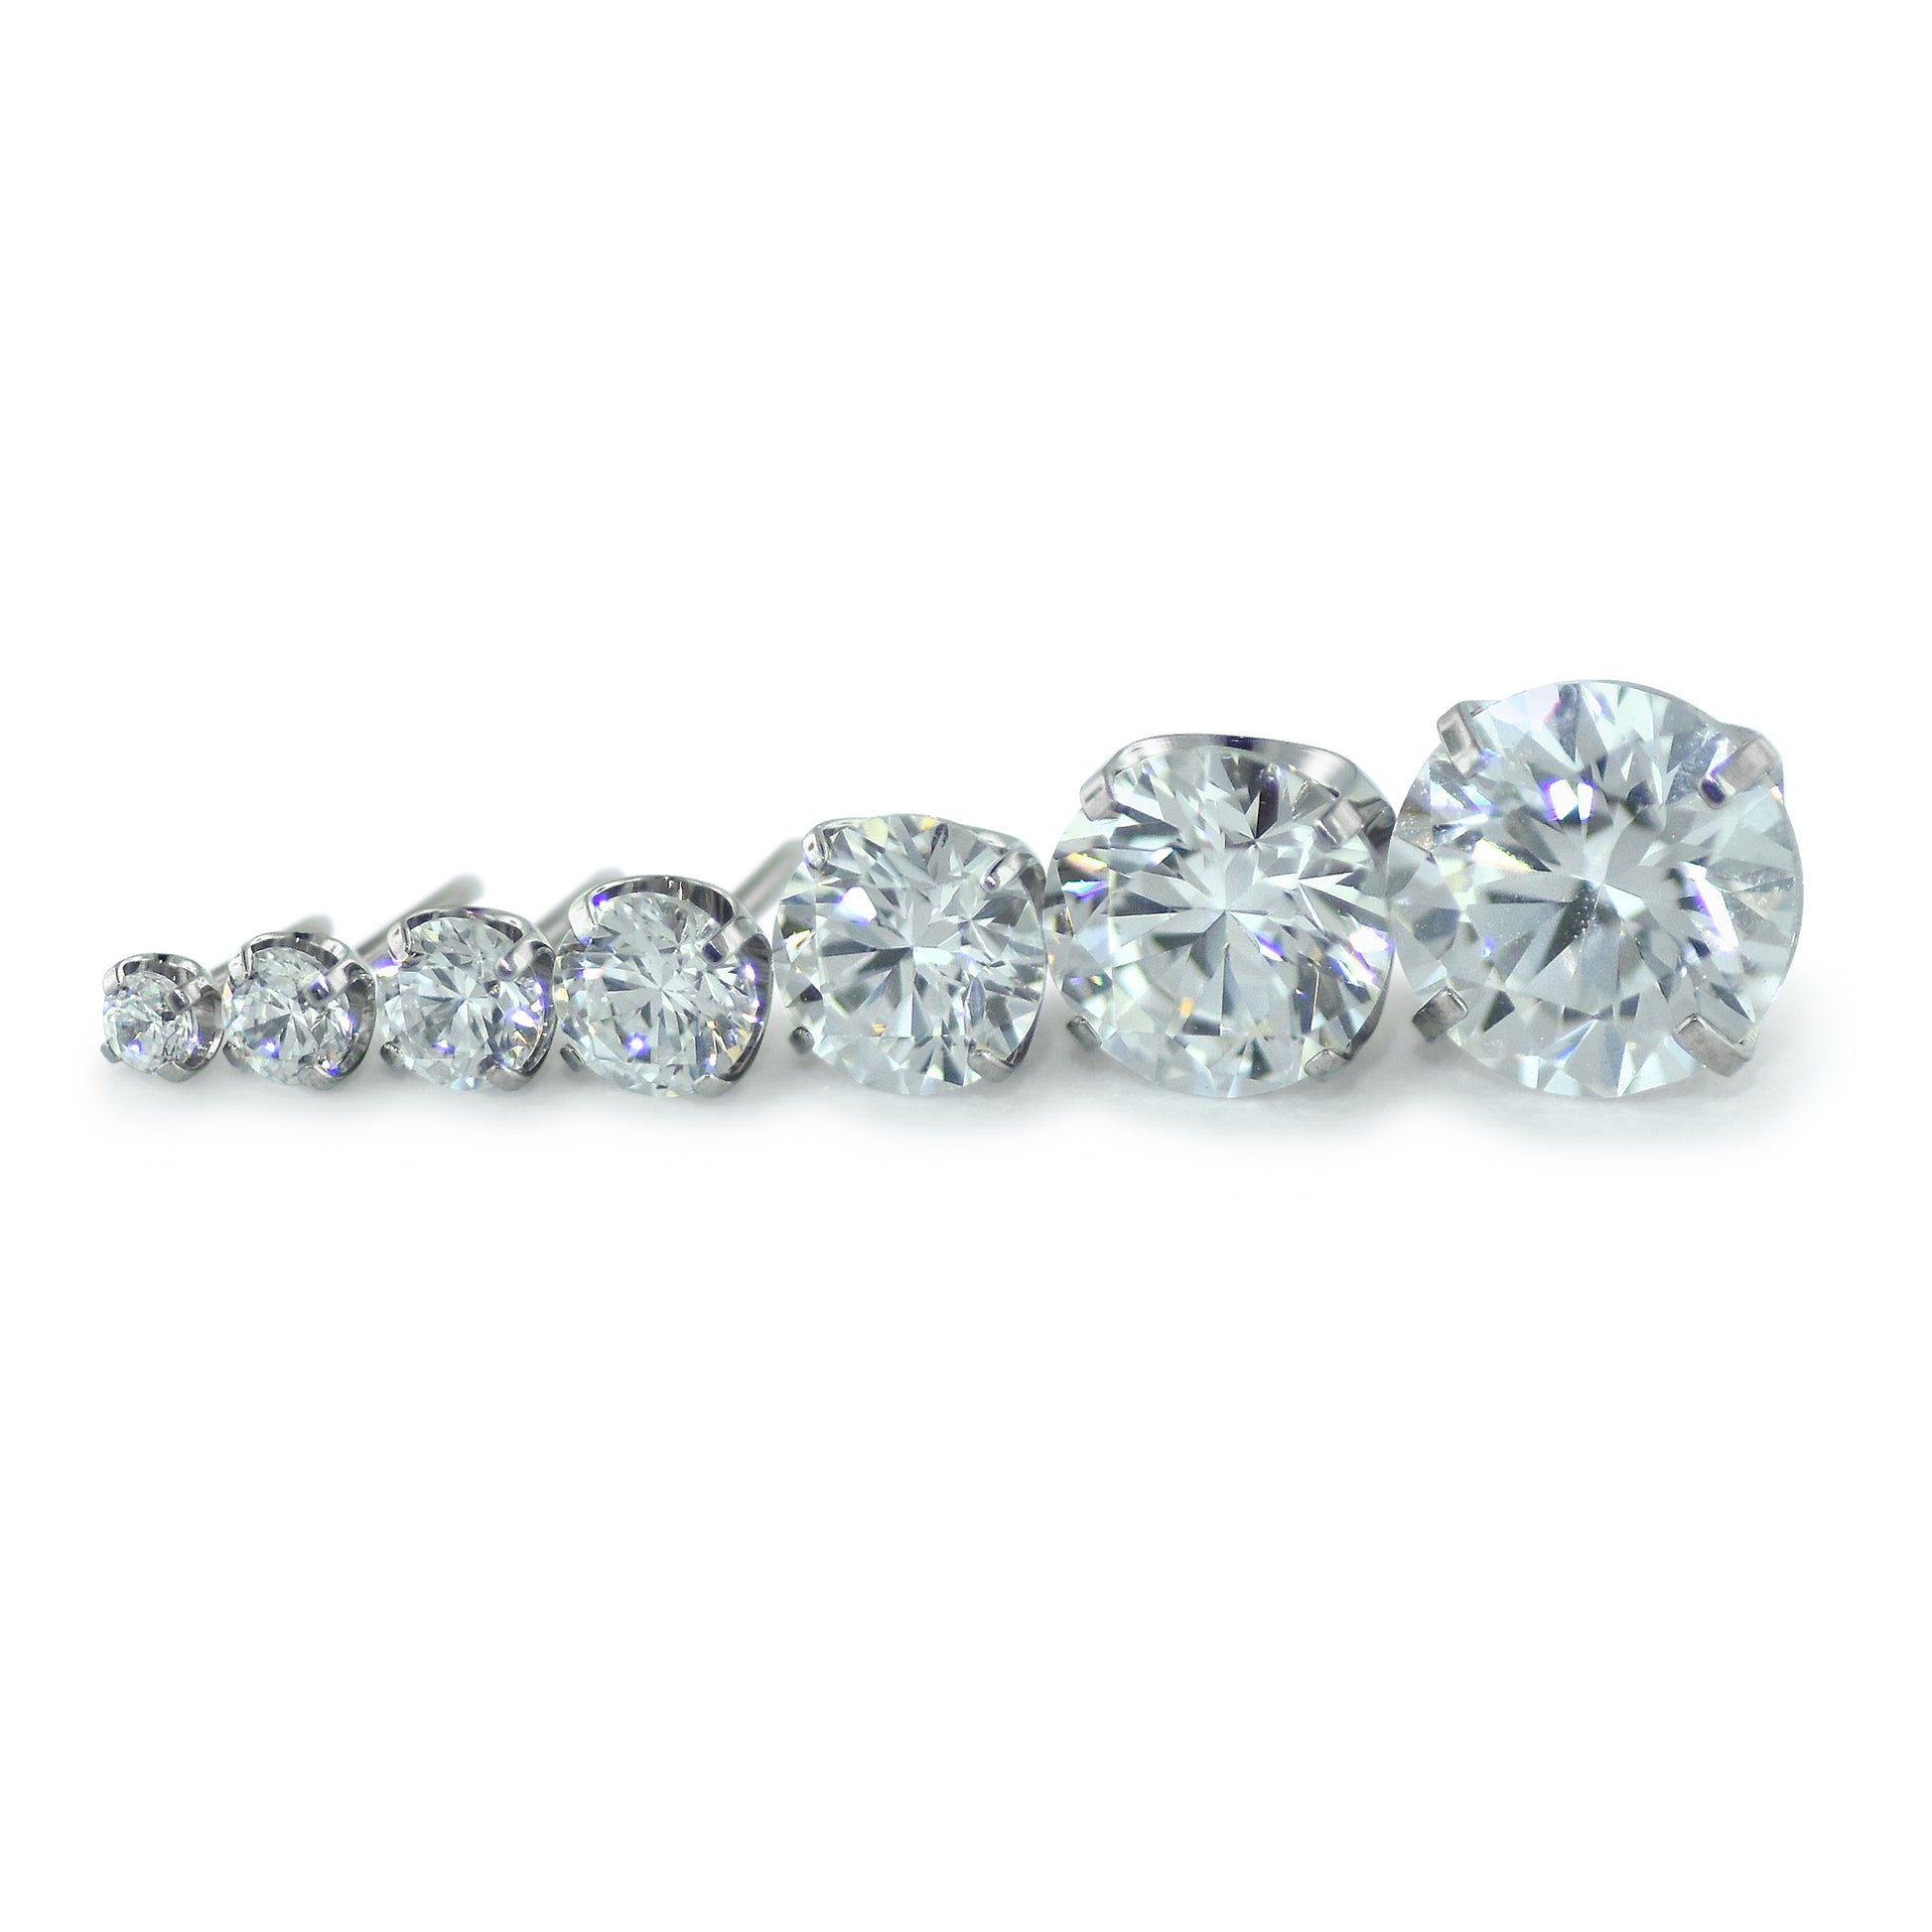 Seven sizes of threadless titanium prong set gem ends with cubic zirconia gems.